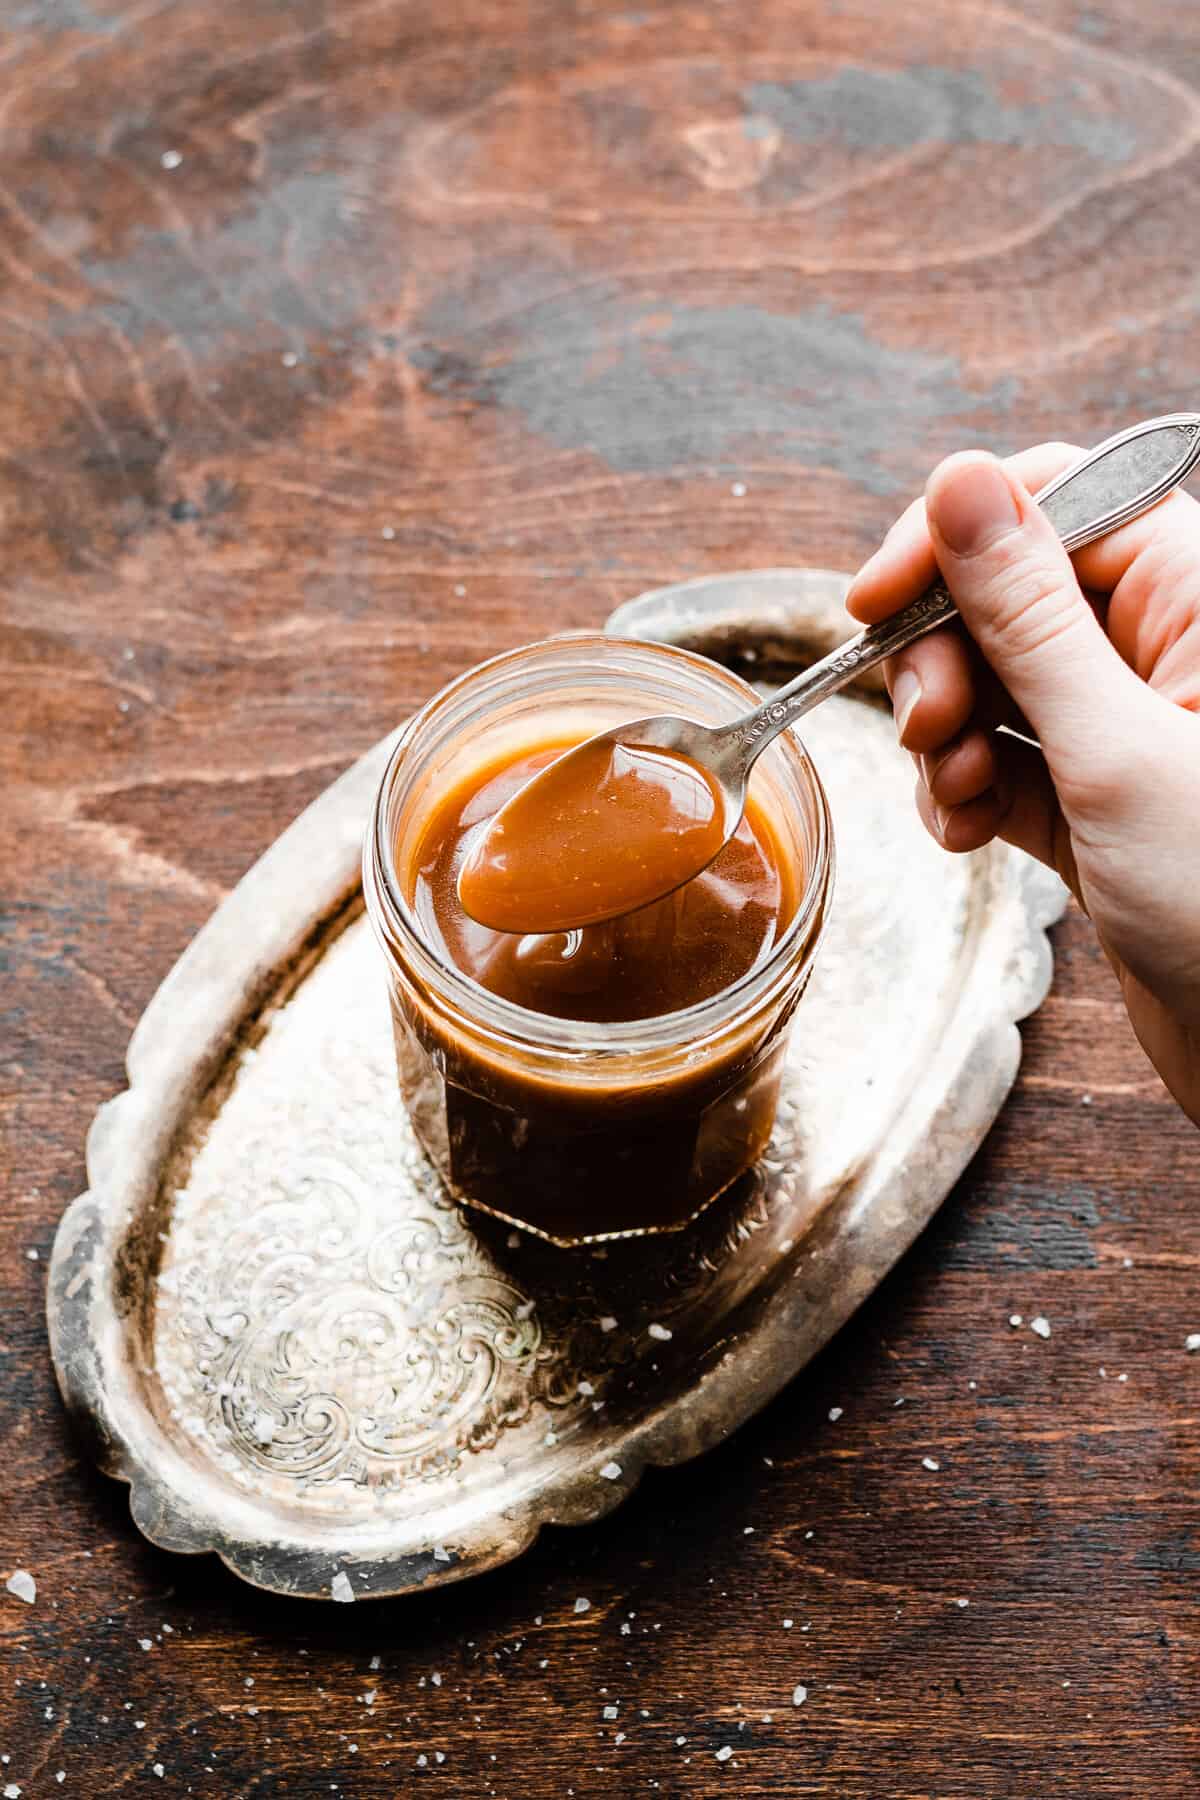 A spoon dipping into a jar of caramel sauce.